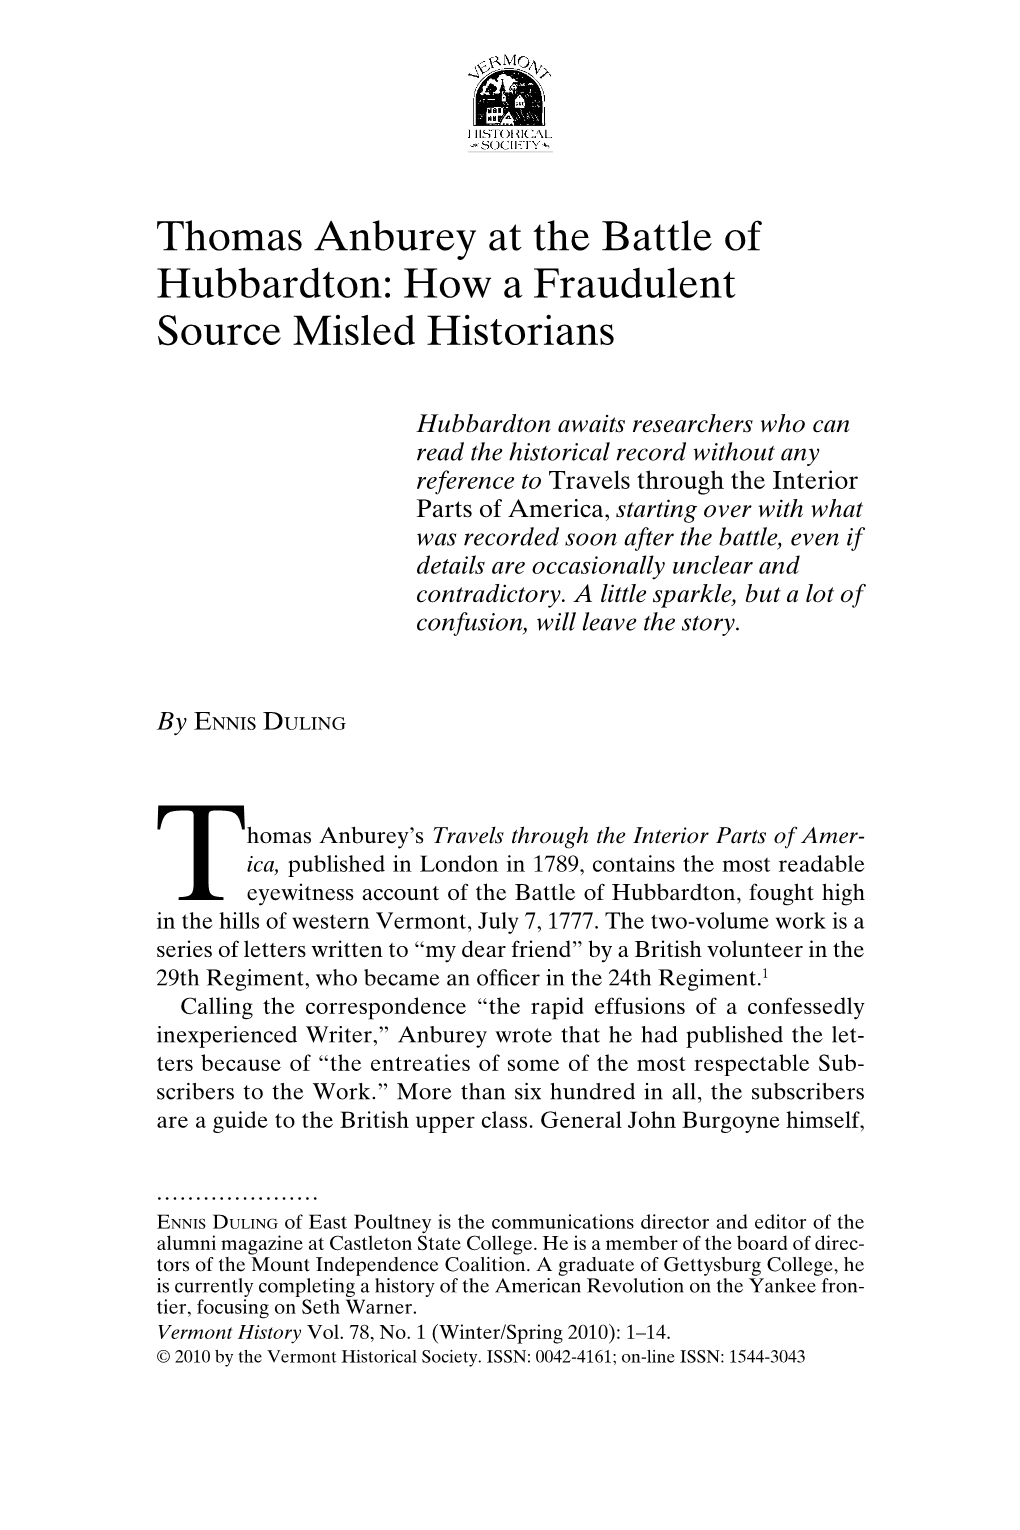 Thomas Anburey at the Battle of Hubbardton: How a Fraudulent Source Misled Historians